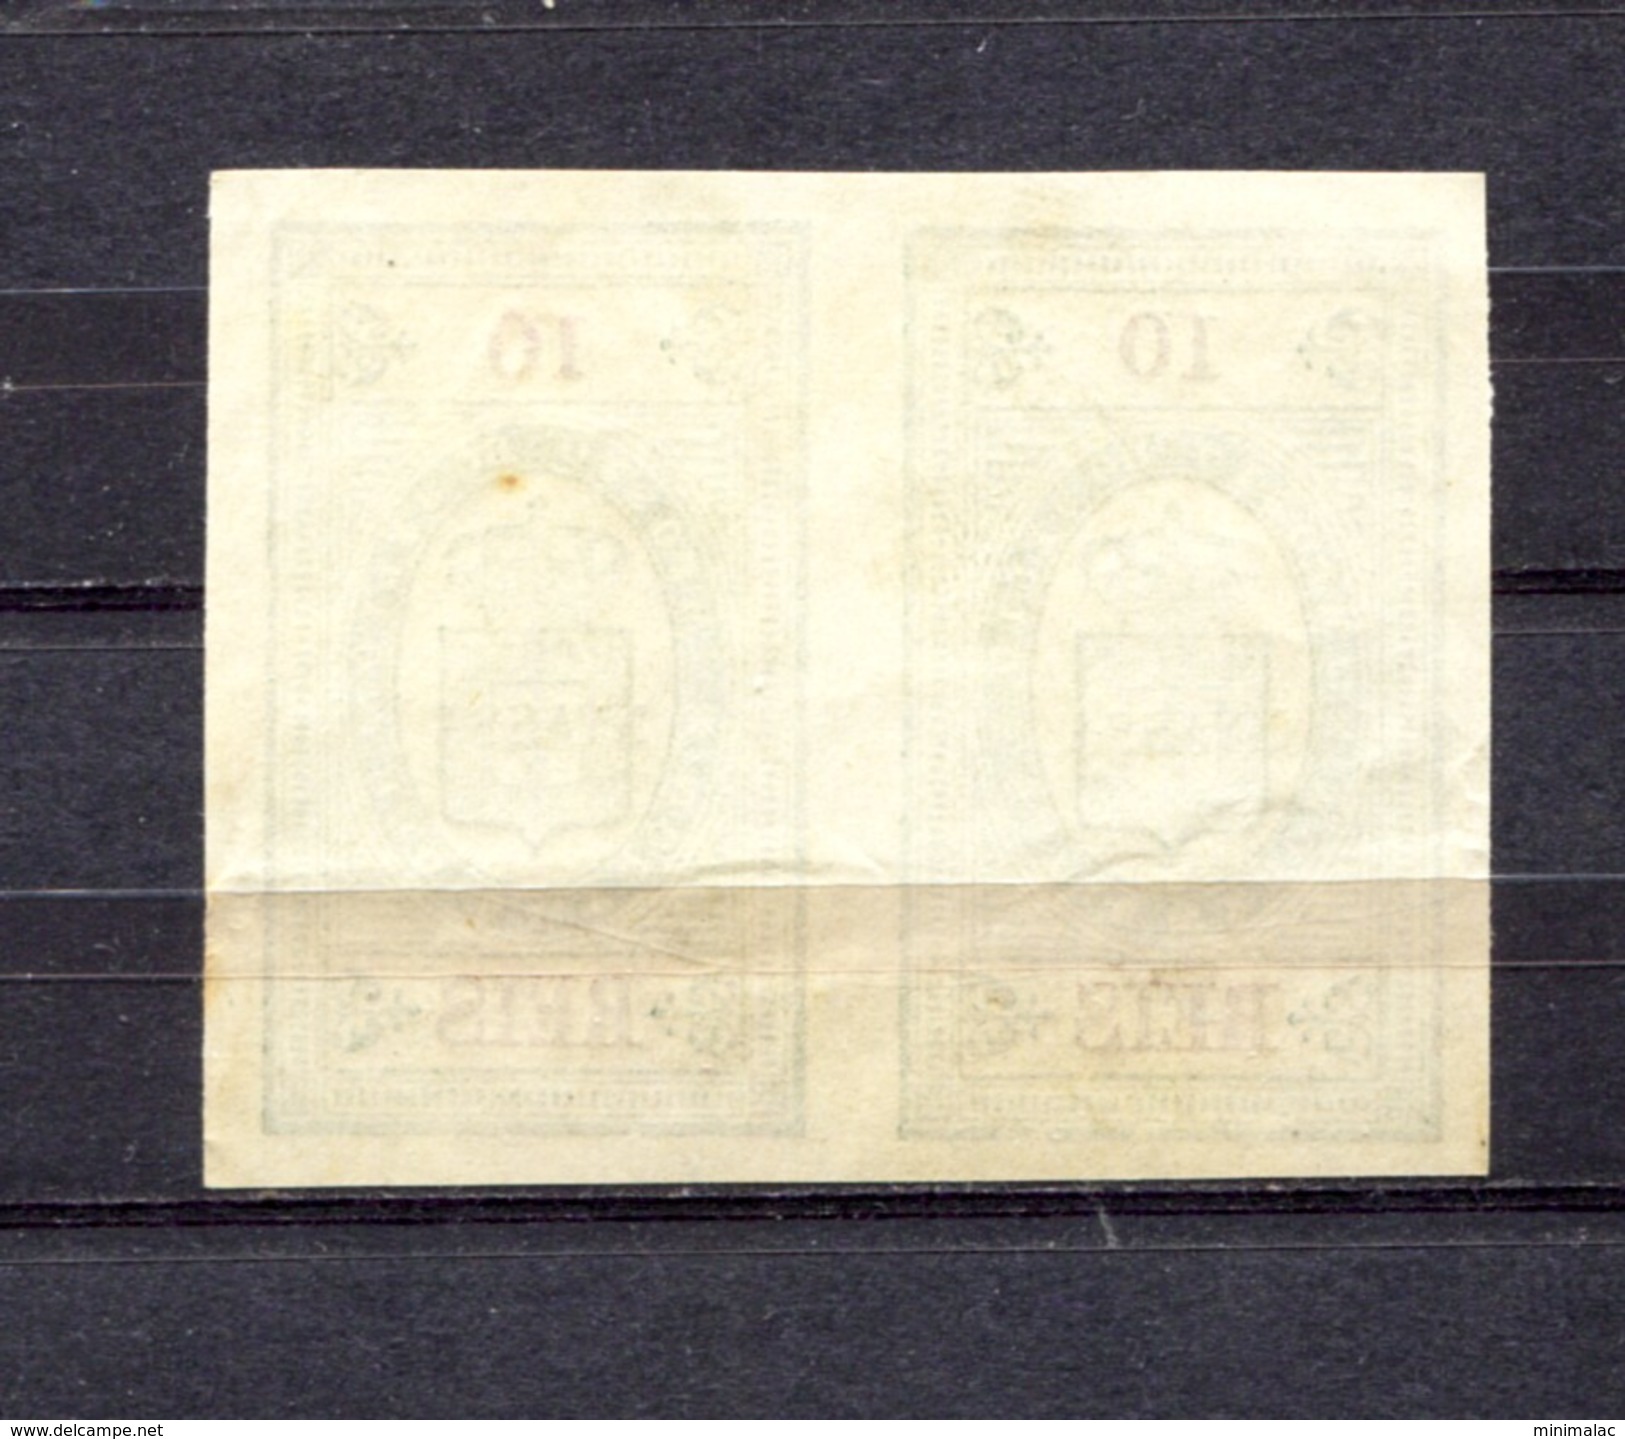 Portugal Colonial Revenue - Nyassa Duty 10 REIS - Unused Stamps